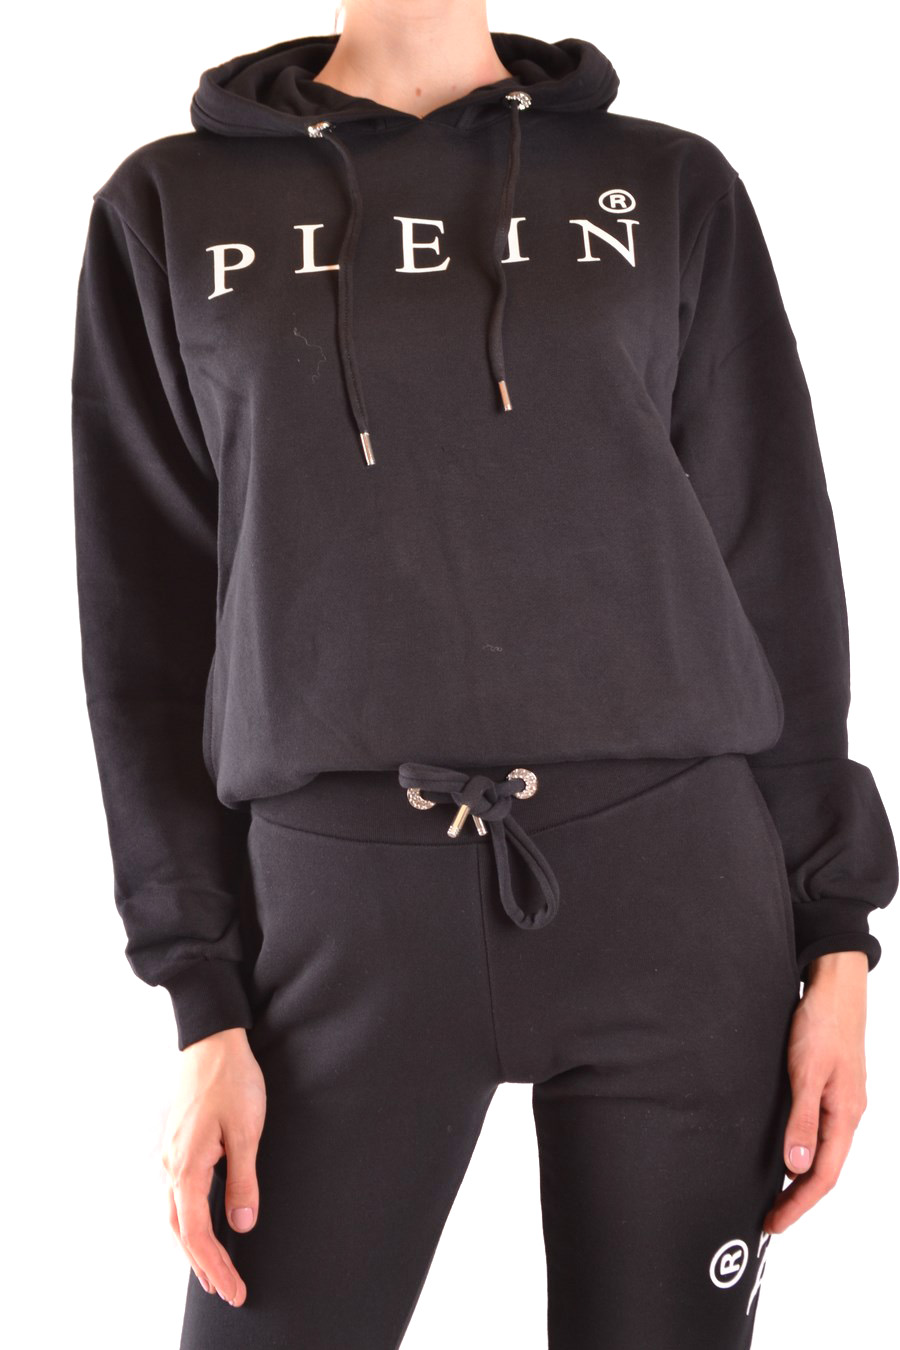 PHILIPP PLEIN Sweatshirts | ViganoBoutique.com